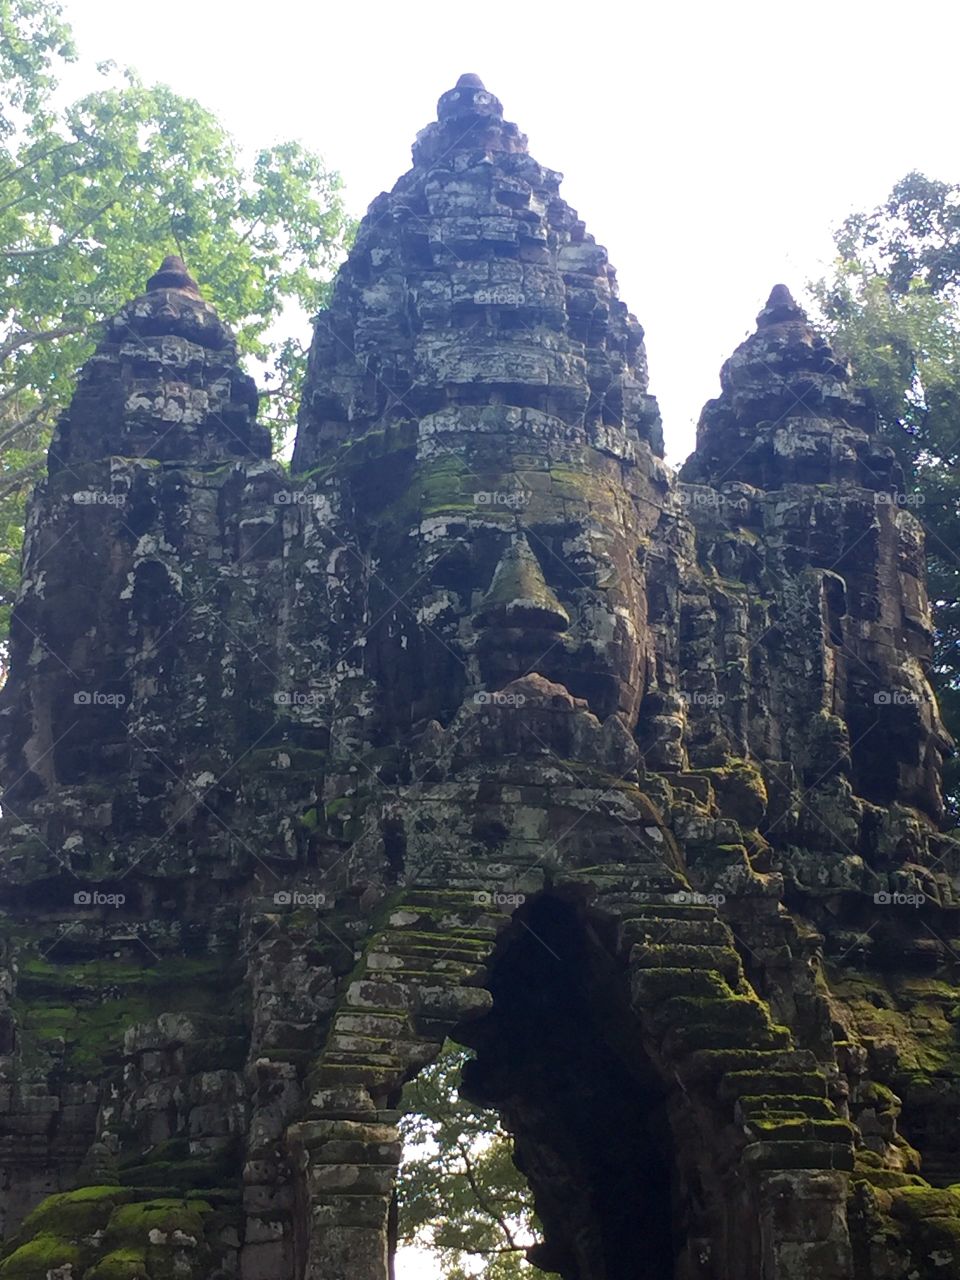 Angkor gate